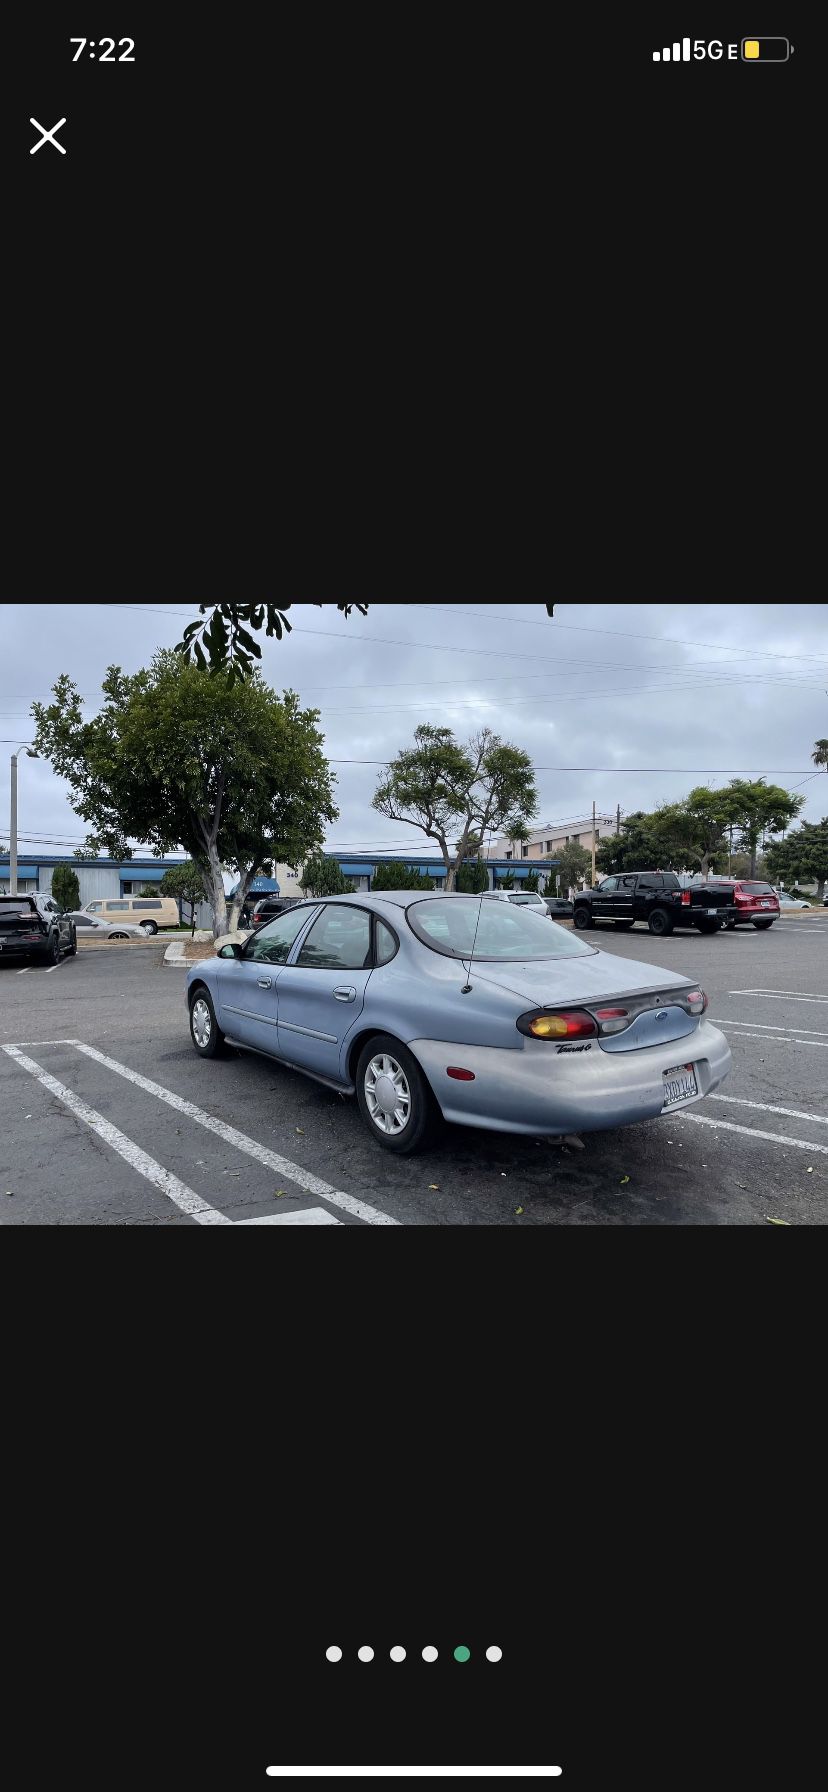 1999 Ford Taurus